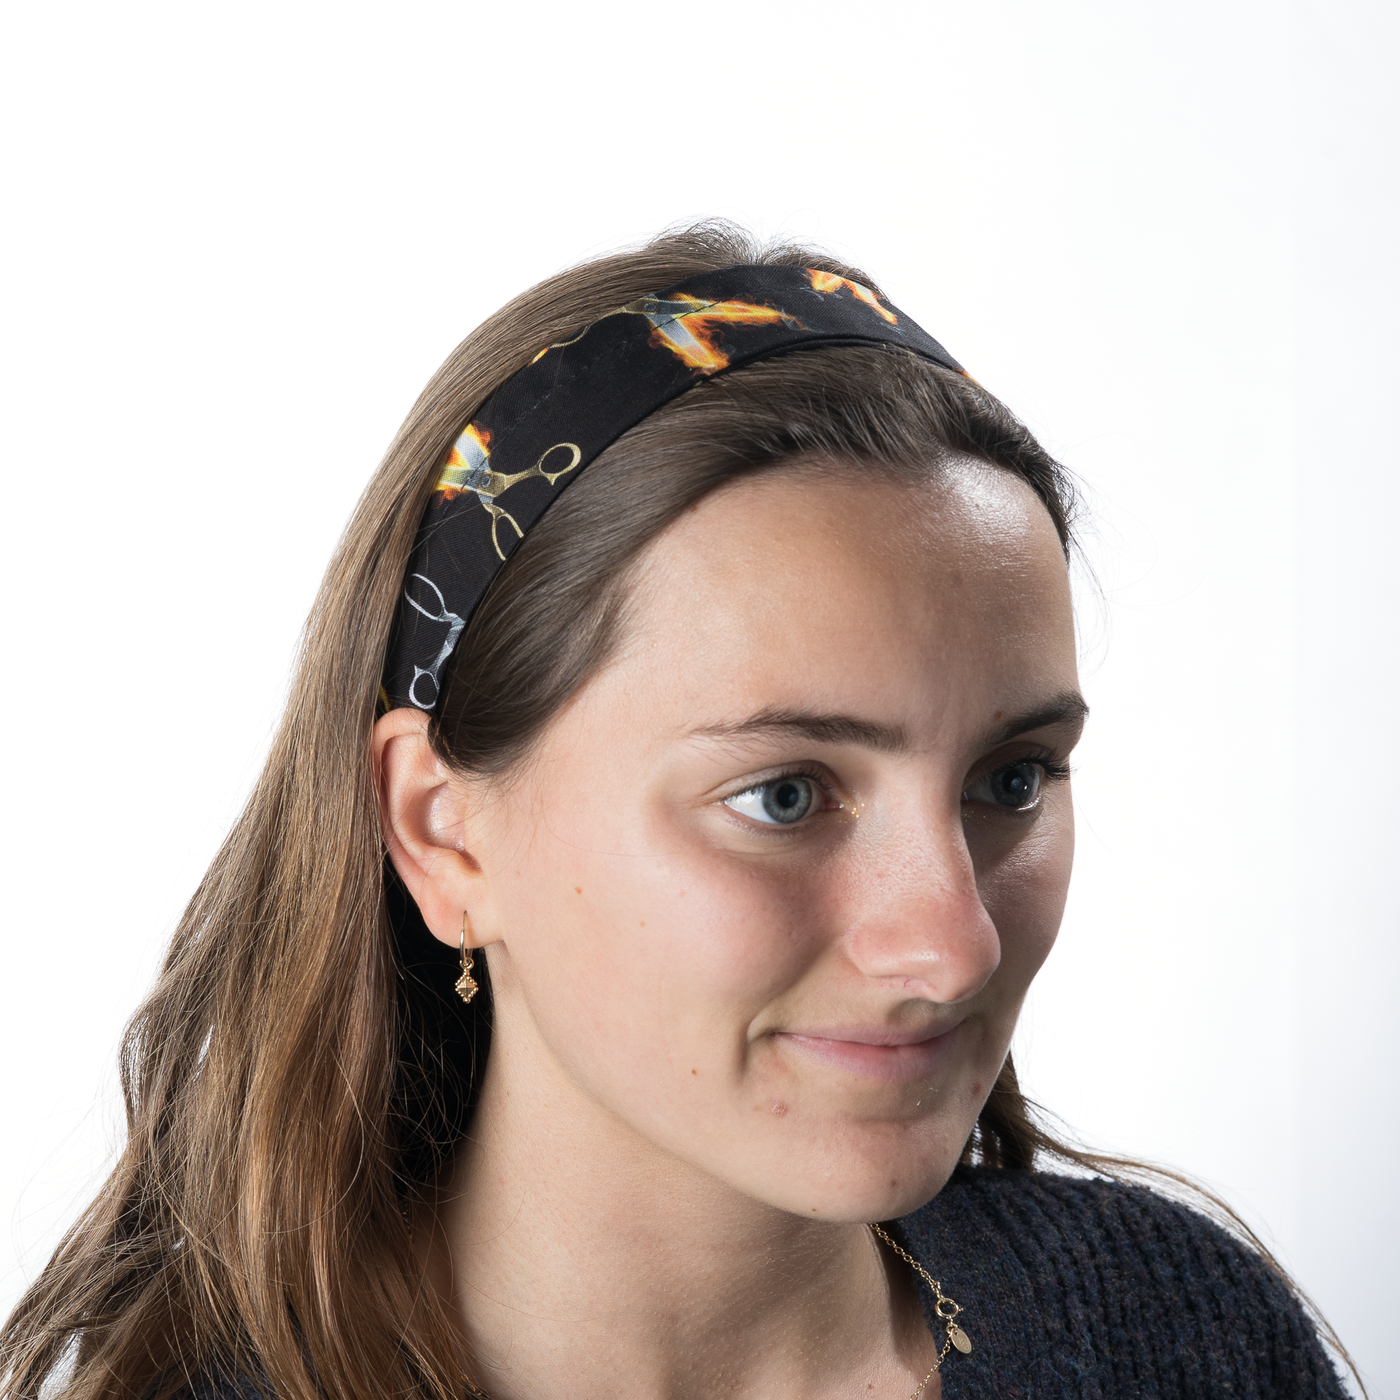 Flaming Scissors Headband ~ Handmade from 100% cotton